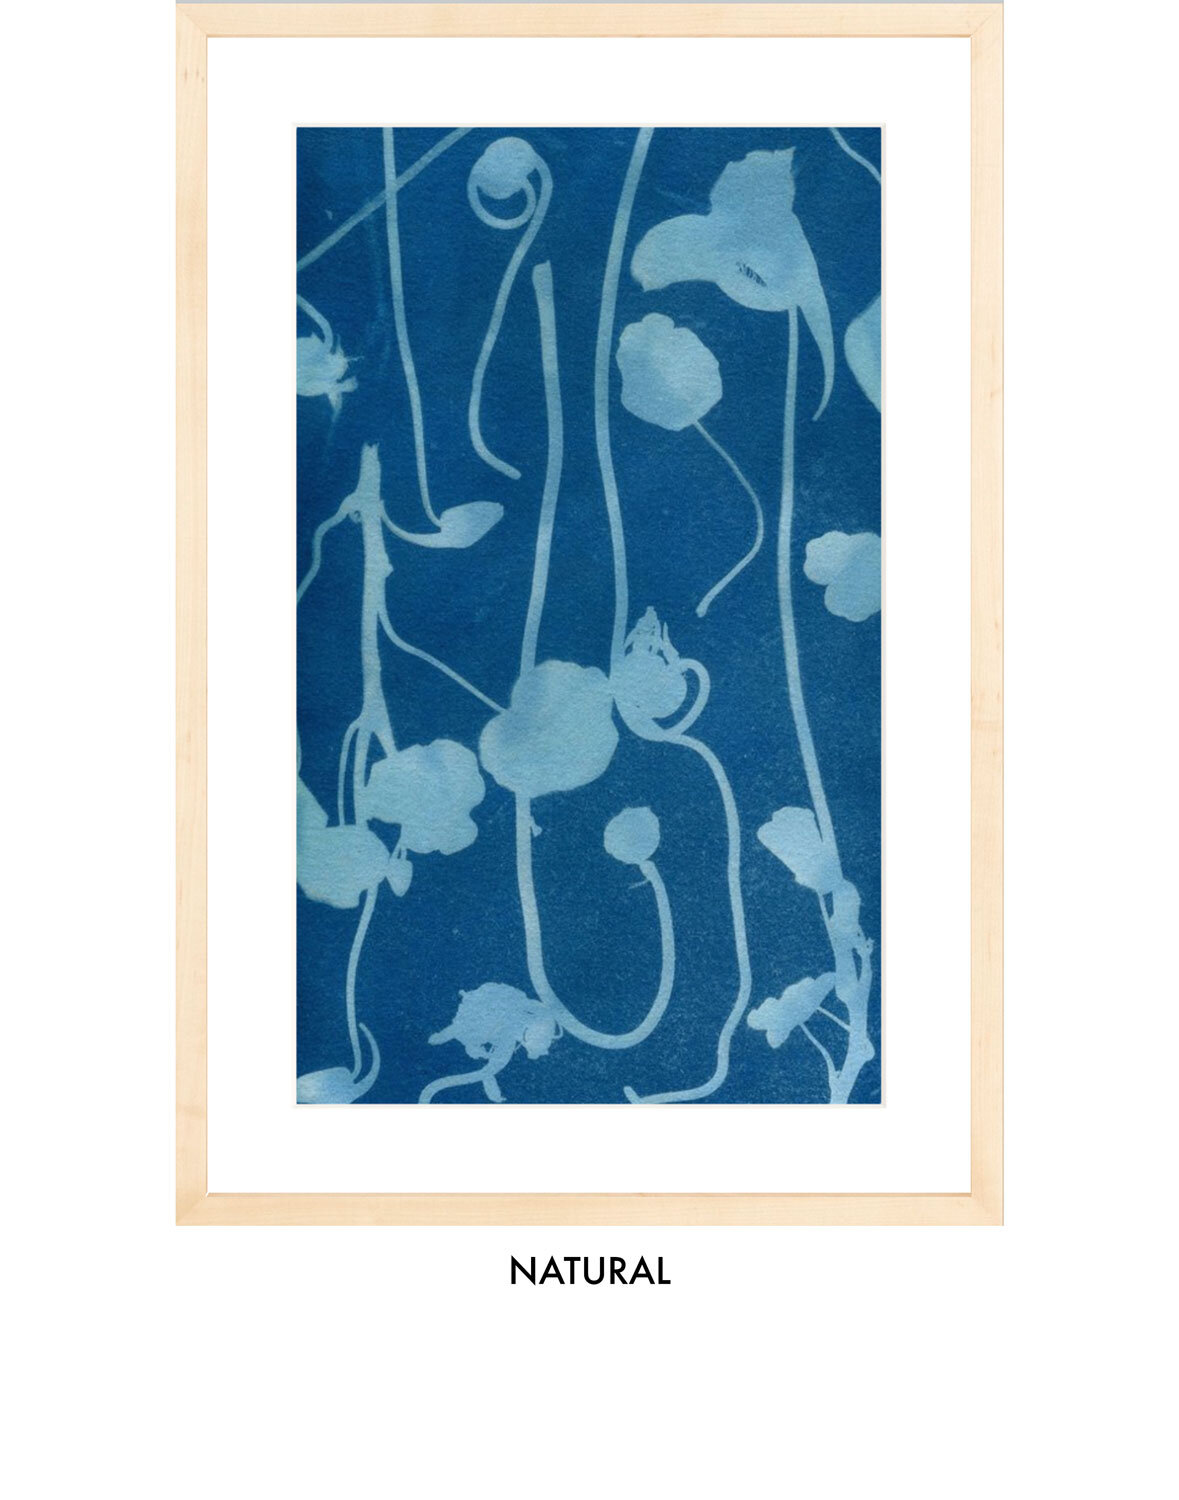 End-of-Season-nasturtium-natural with mat.jpg